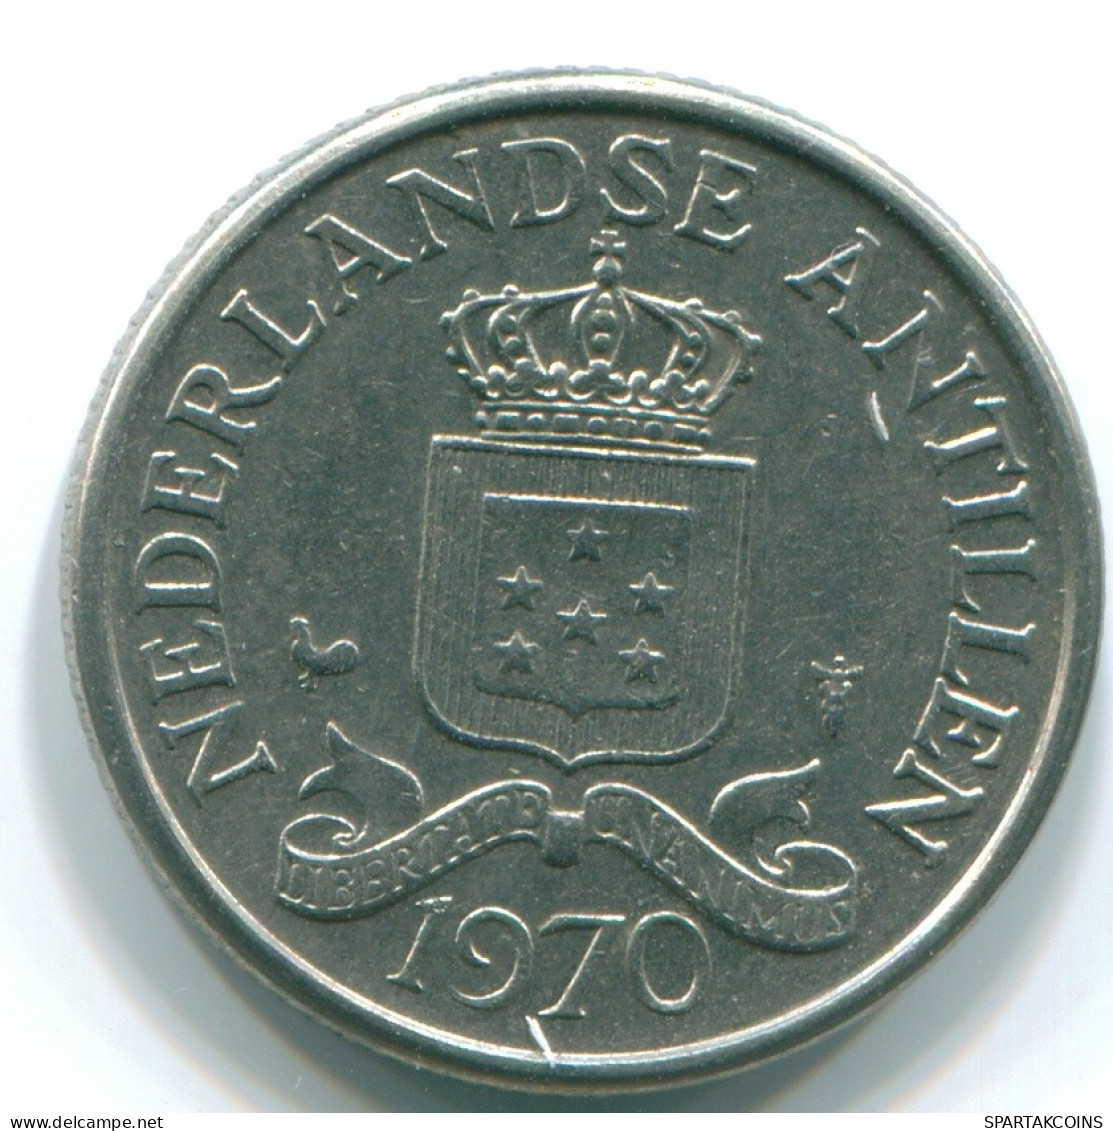 25 CENTS 1970 NETHERLANDS ANTILLES Nickel Colonial Coin #S11456.U.A - Antilles Néerlandaises